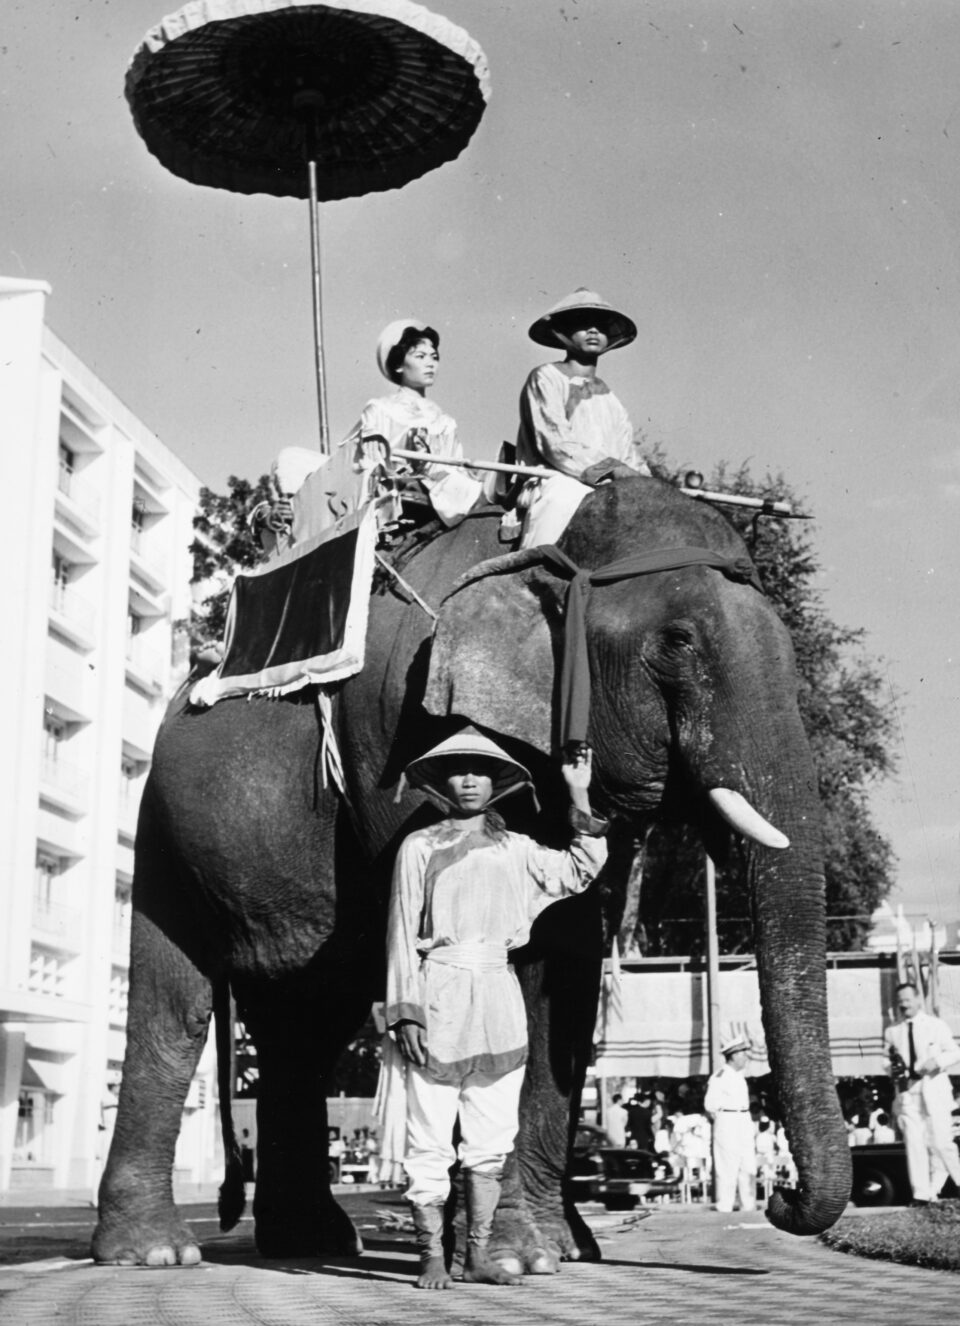 storia sorelle Trung Vietnam - parata in onore delle sorelle a Saigon nel 1961